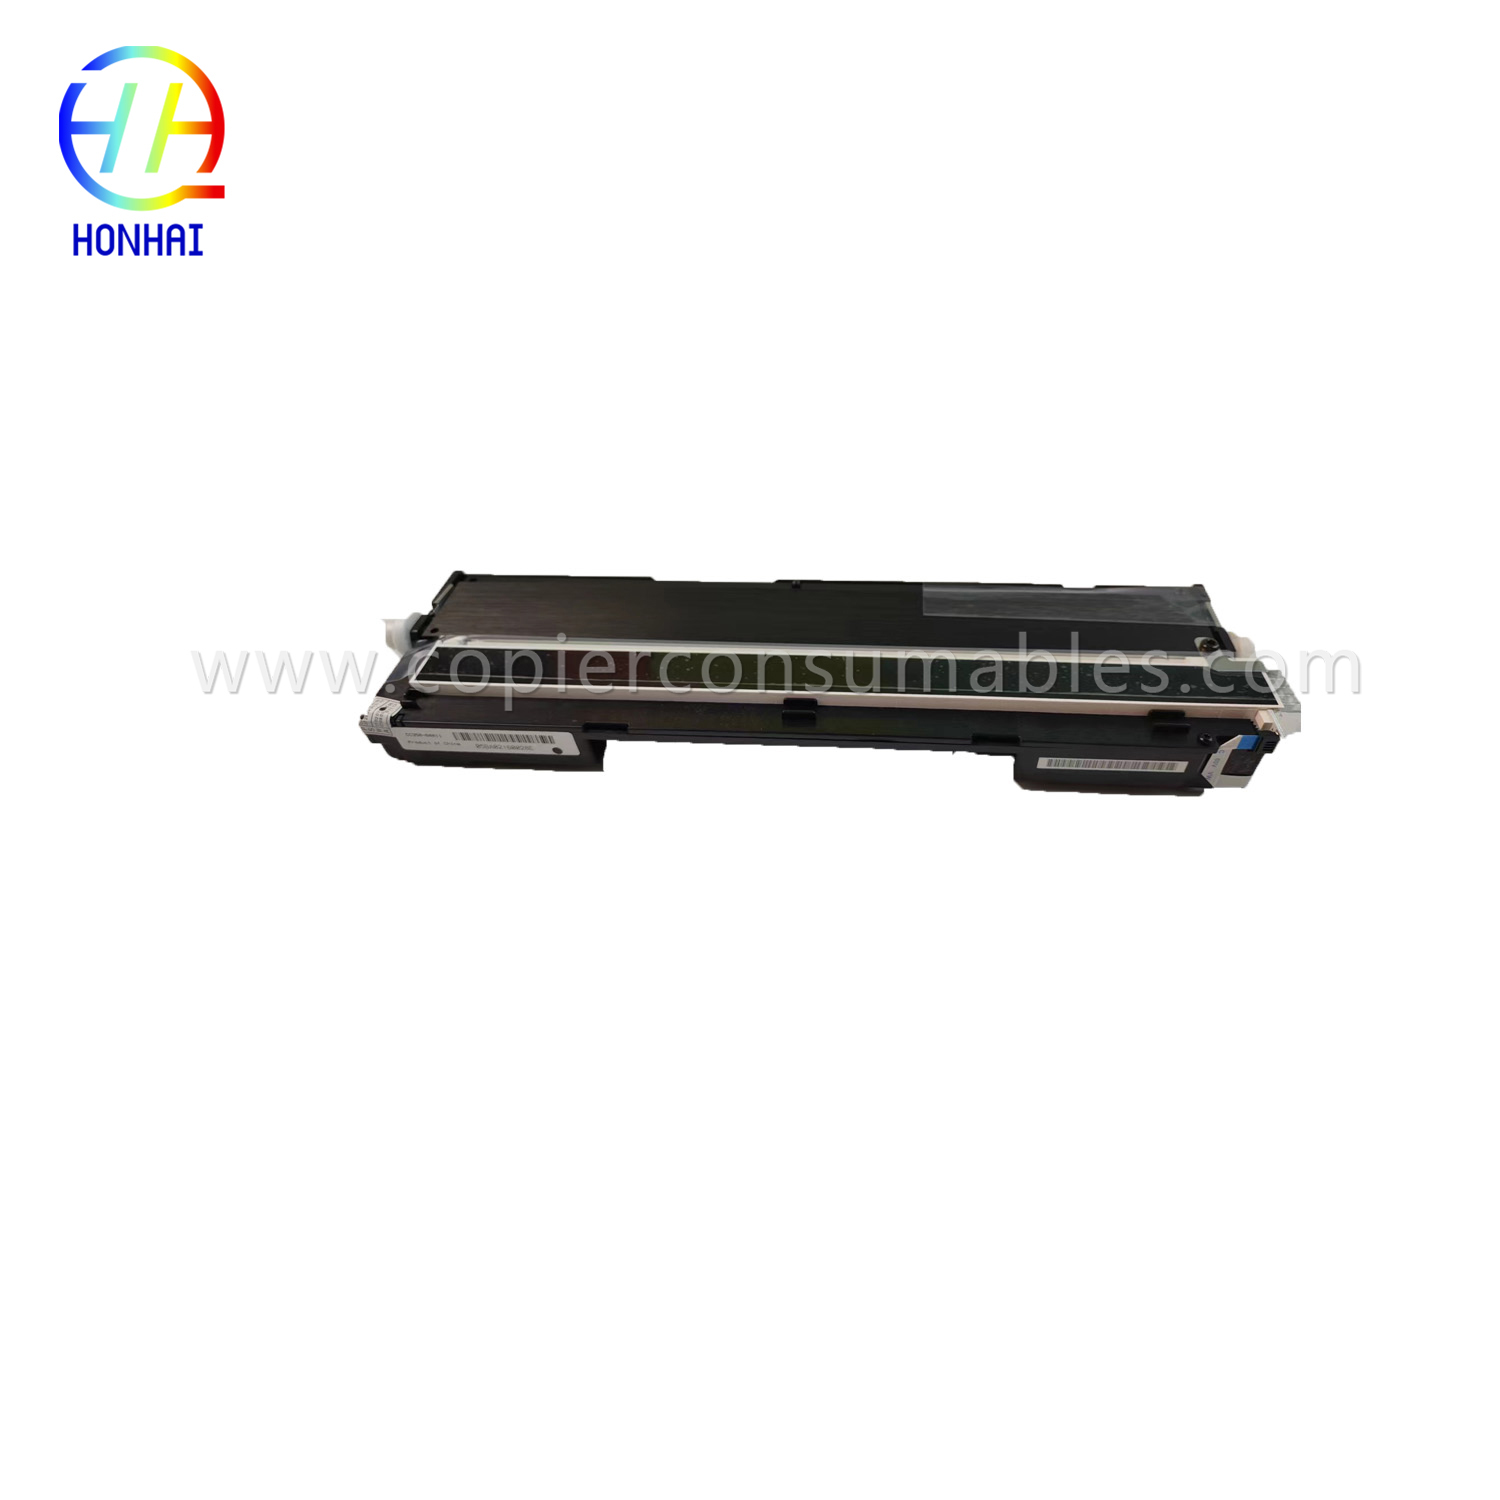 Scanner Head Unit for HP CLJ Ent 500 M575 M525 M630 M680 CC350-60011(4).jpg-1 拷贝